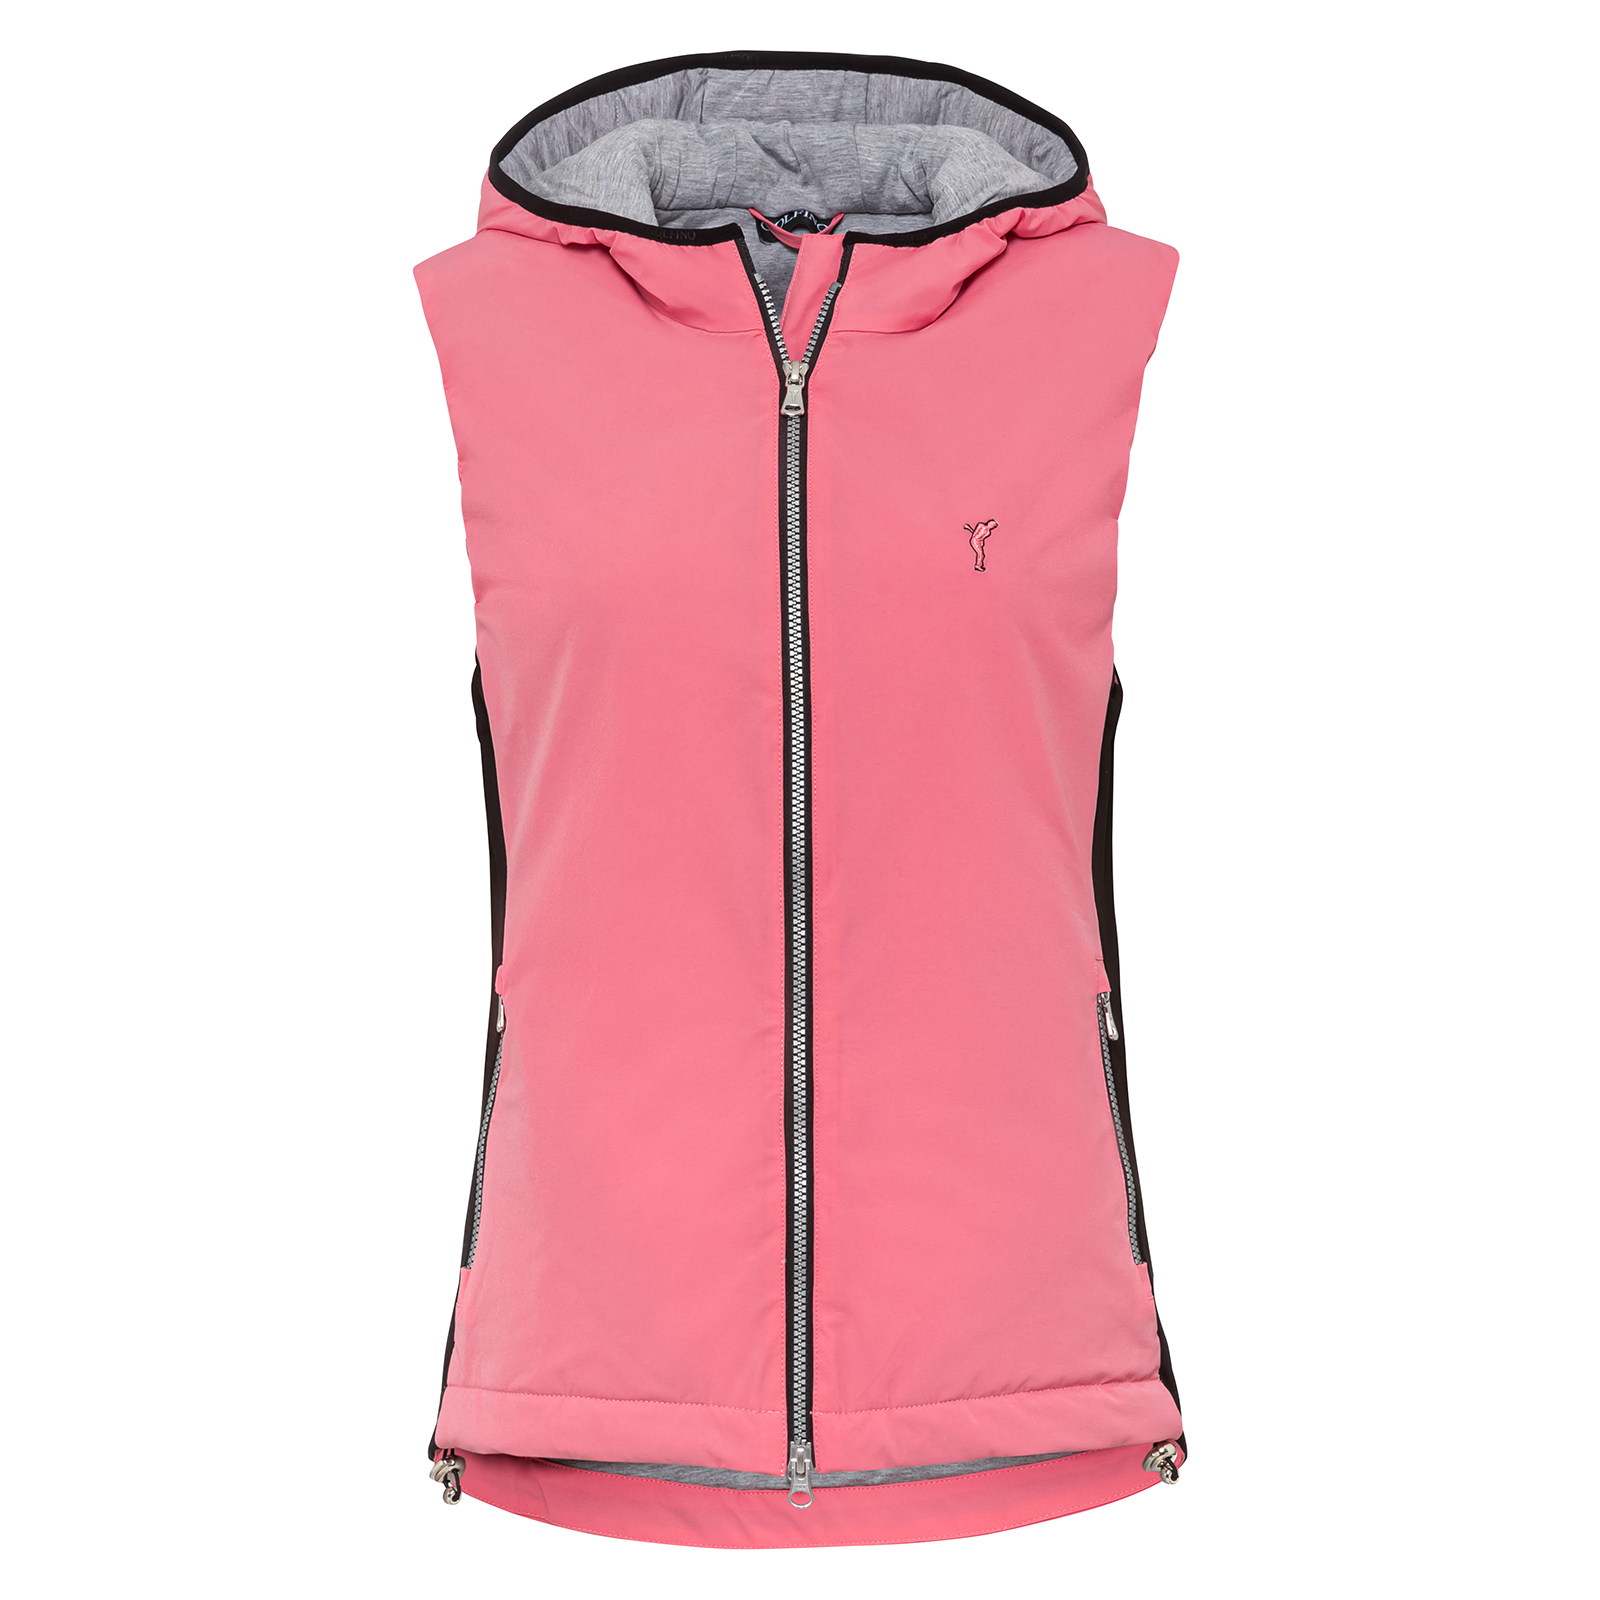 Ladies' windproof golf waistcoat with soft fleece lining and hood